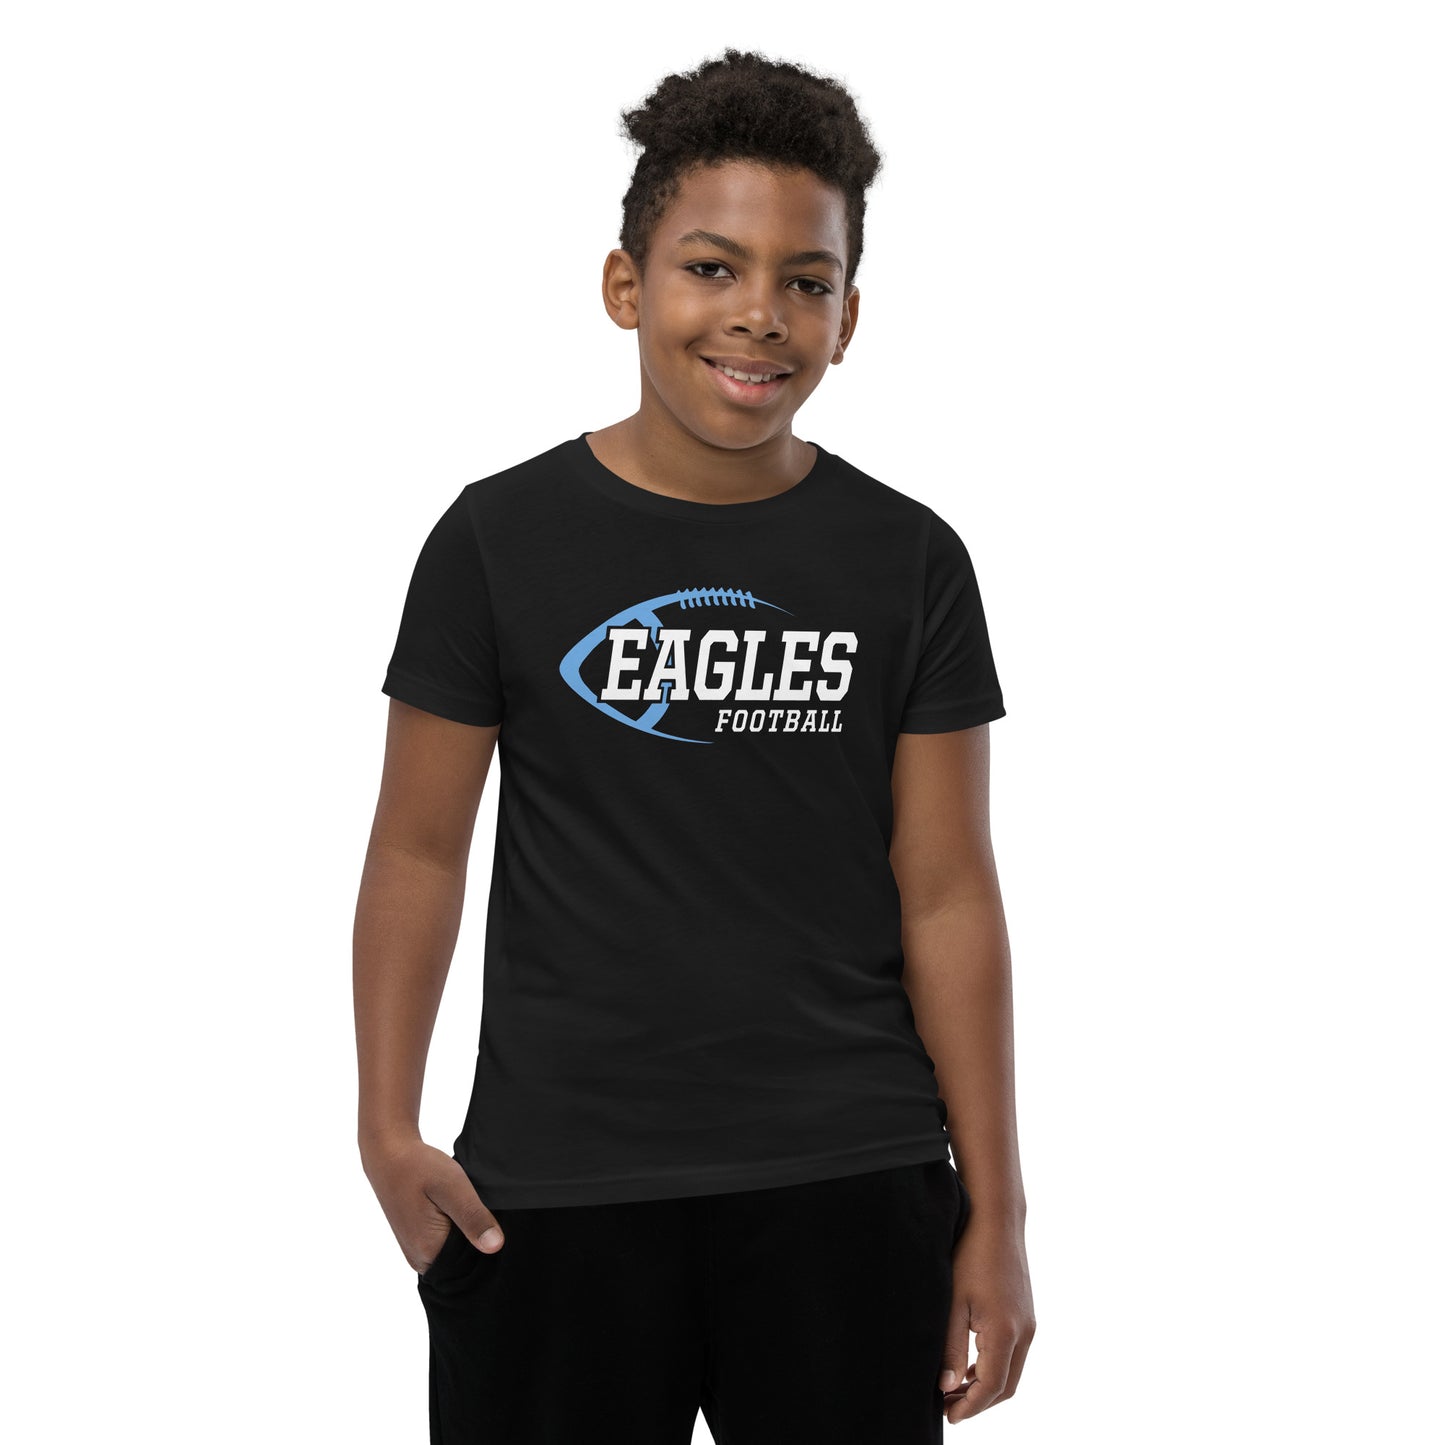 Football Customizable Youth T-Shirt